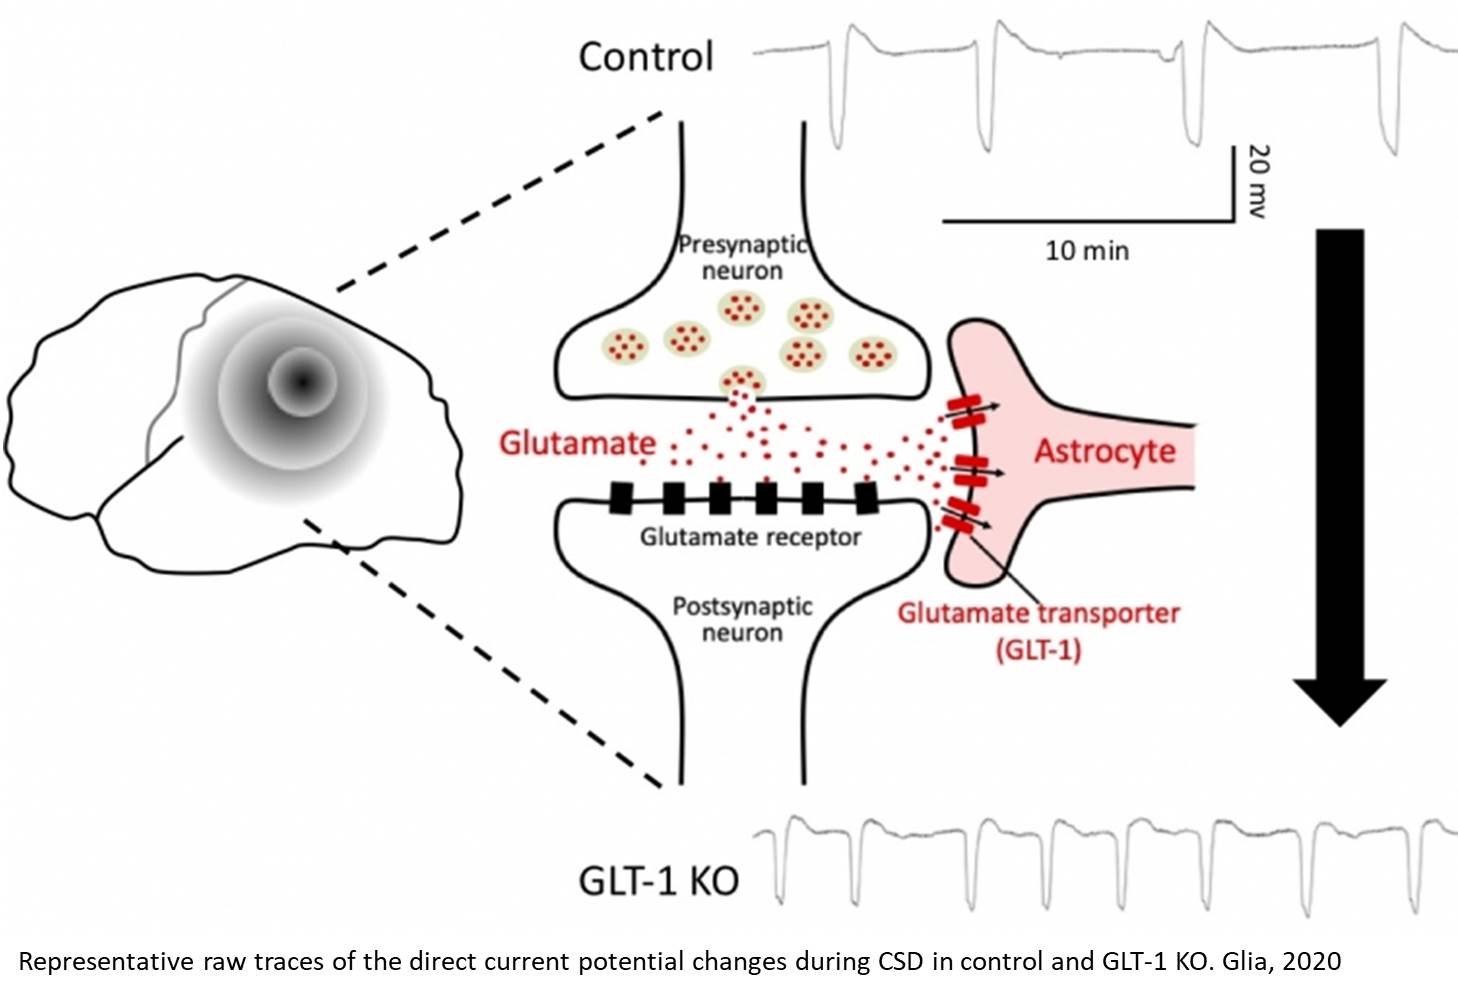 Glial glutamate transporter implicated in spreading cortical depression resulting in migraine 